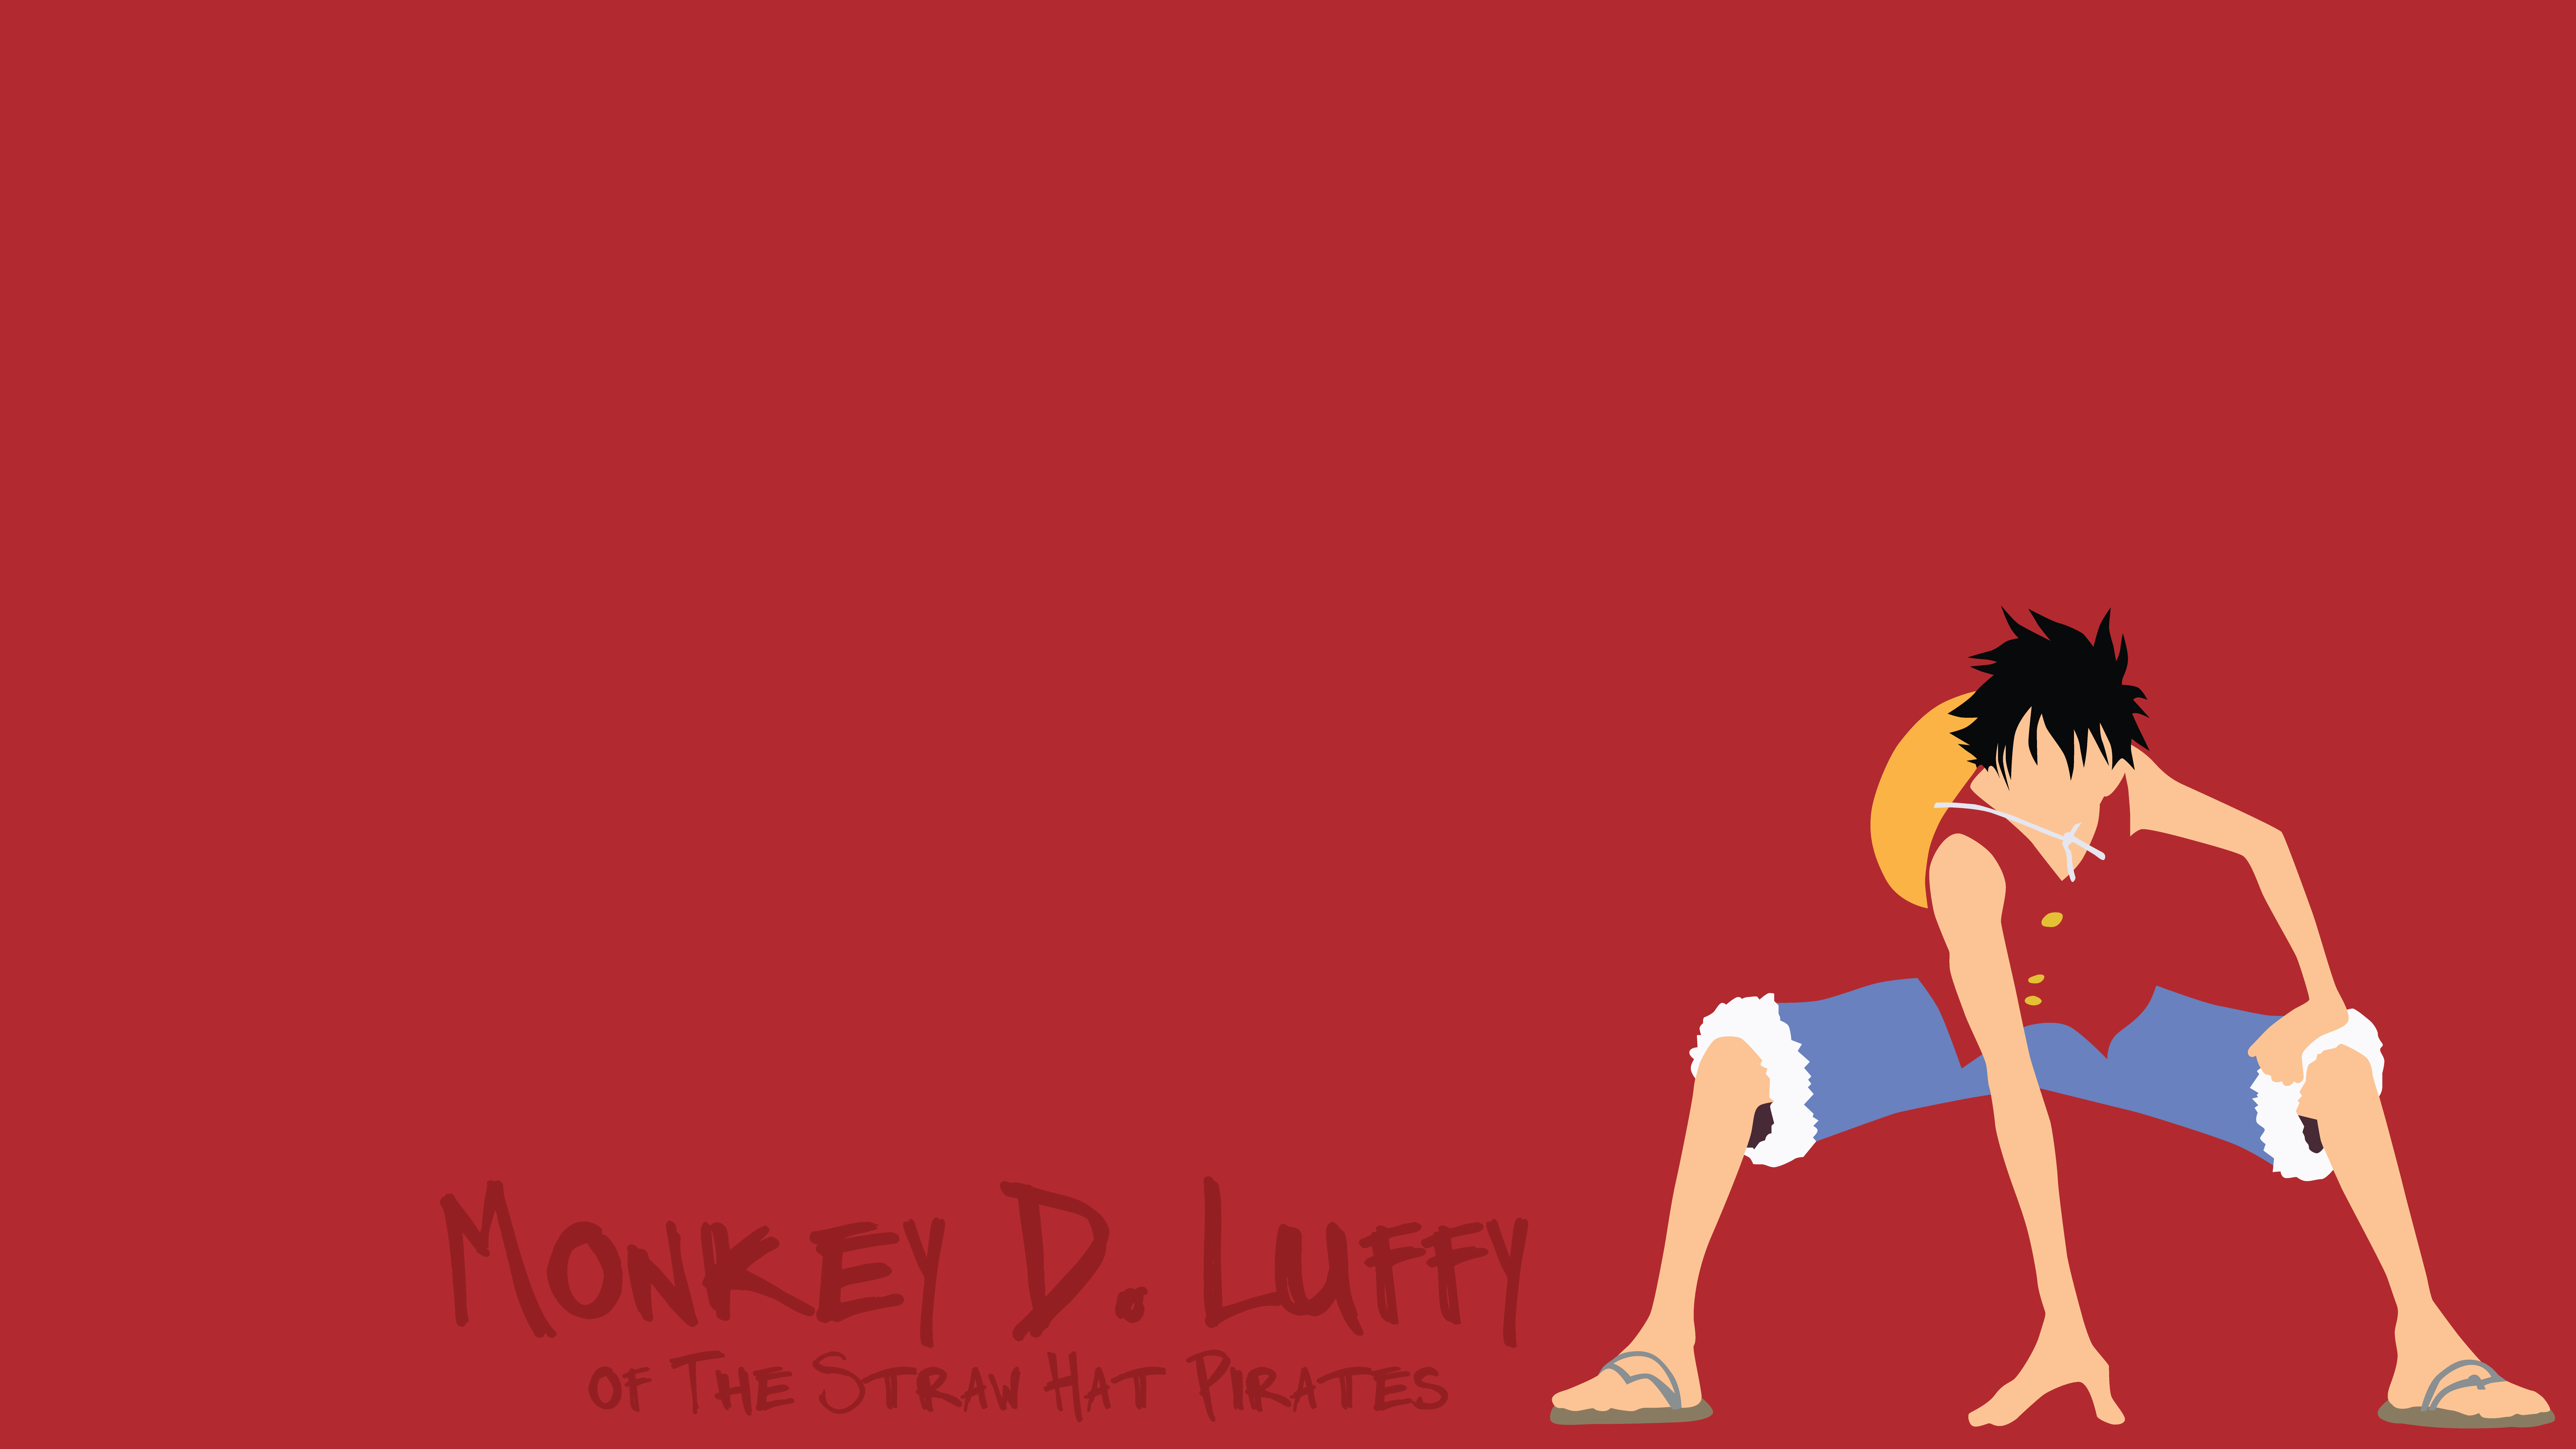 Monkey D. Luffy [1920 x 1080]